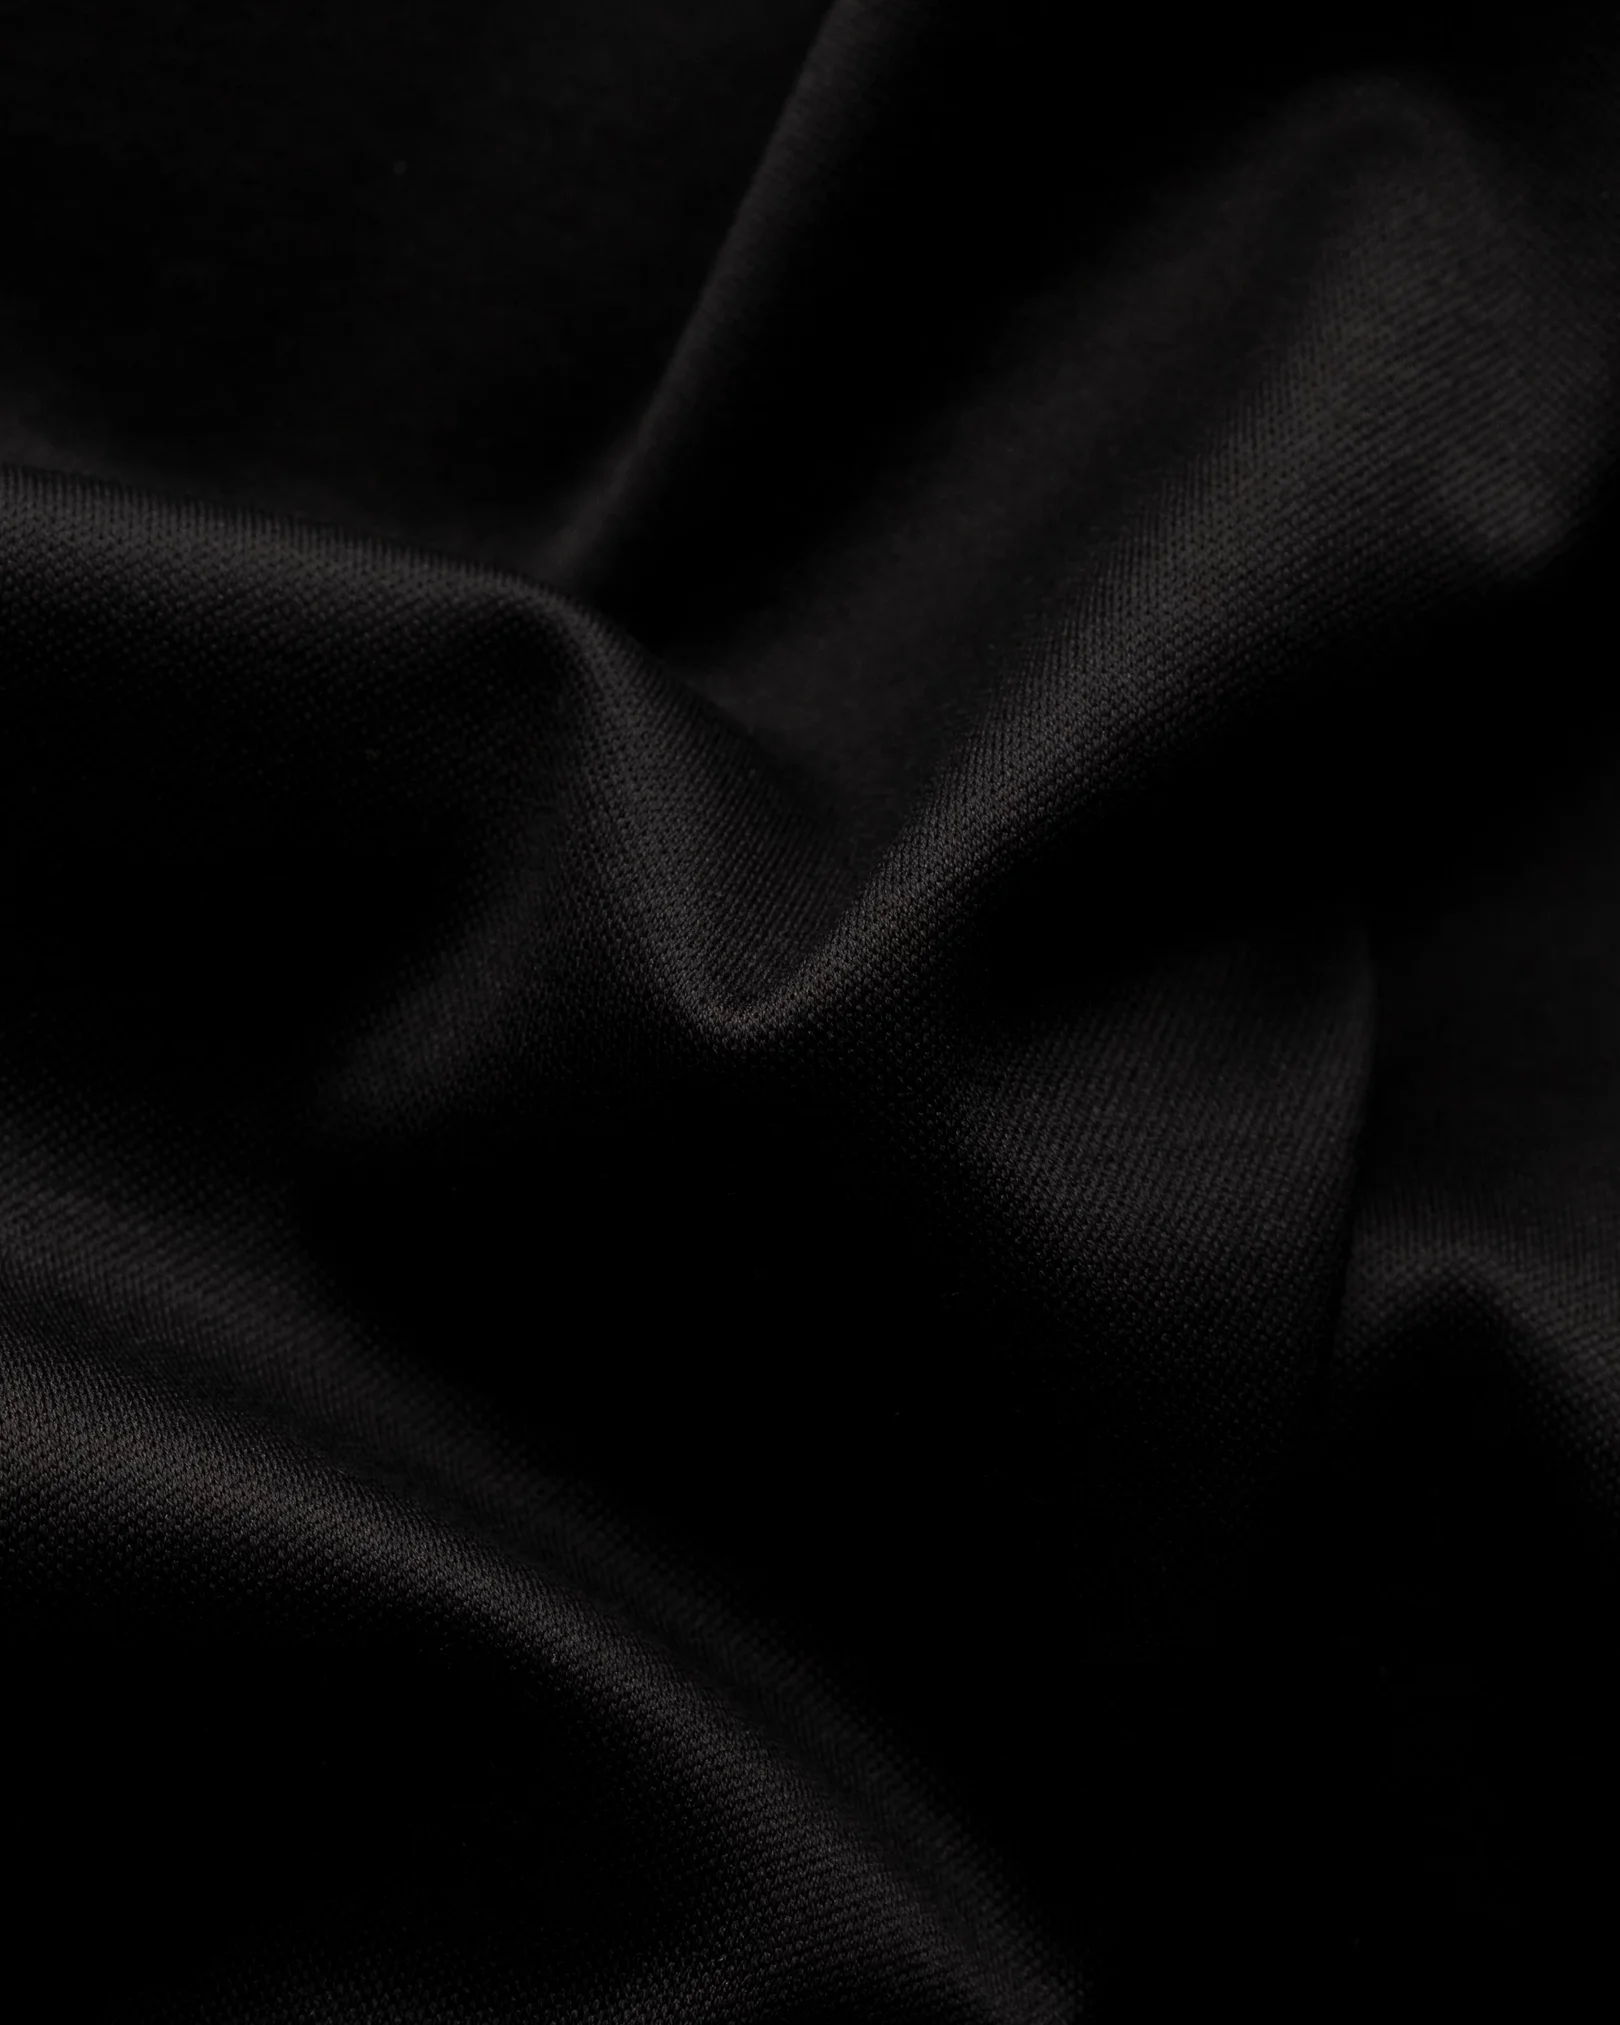 Eton - black filo di scozia pop over shirt knitted collar knitted cuff slim jersey